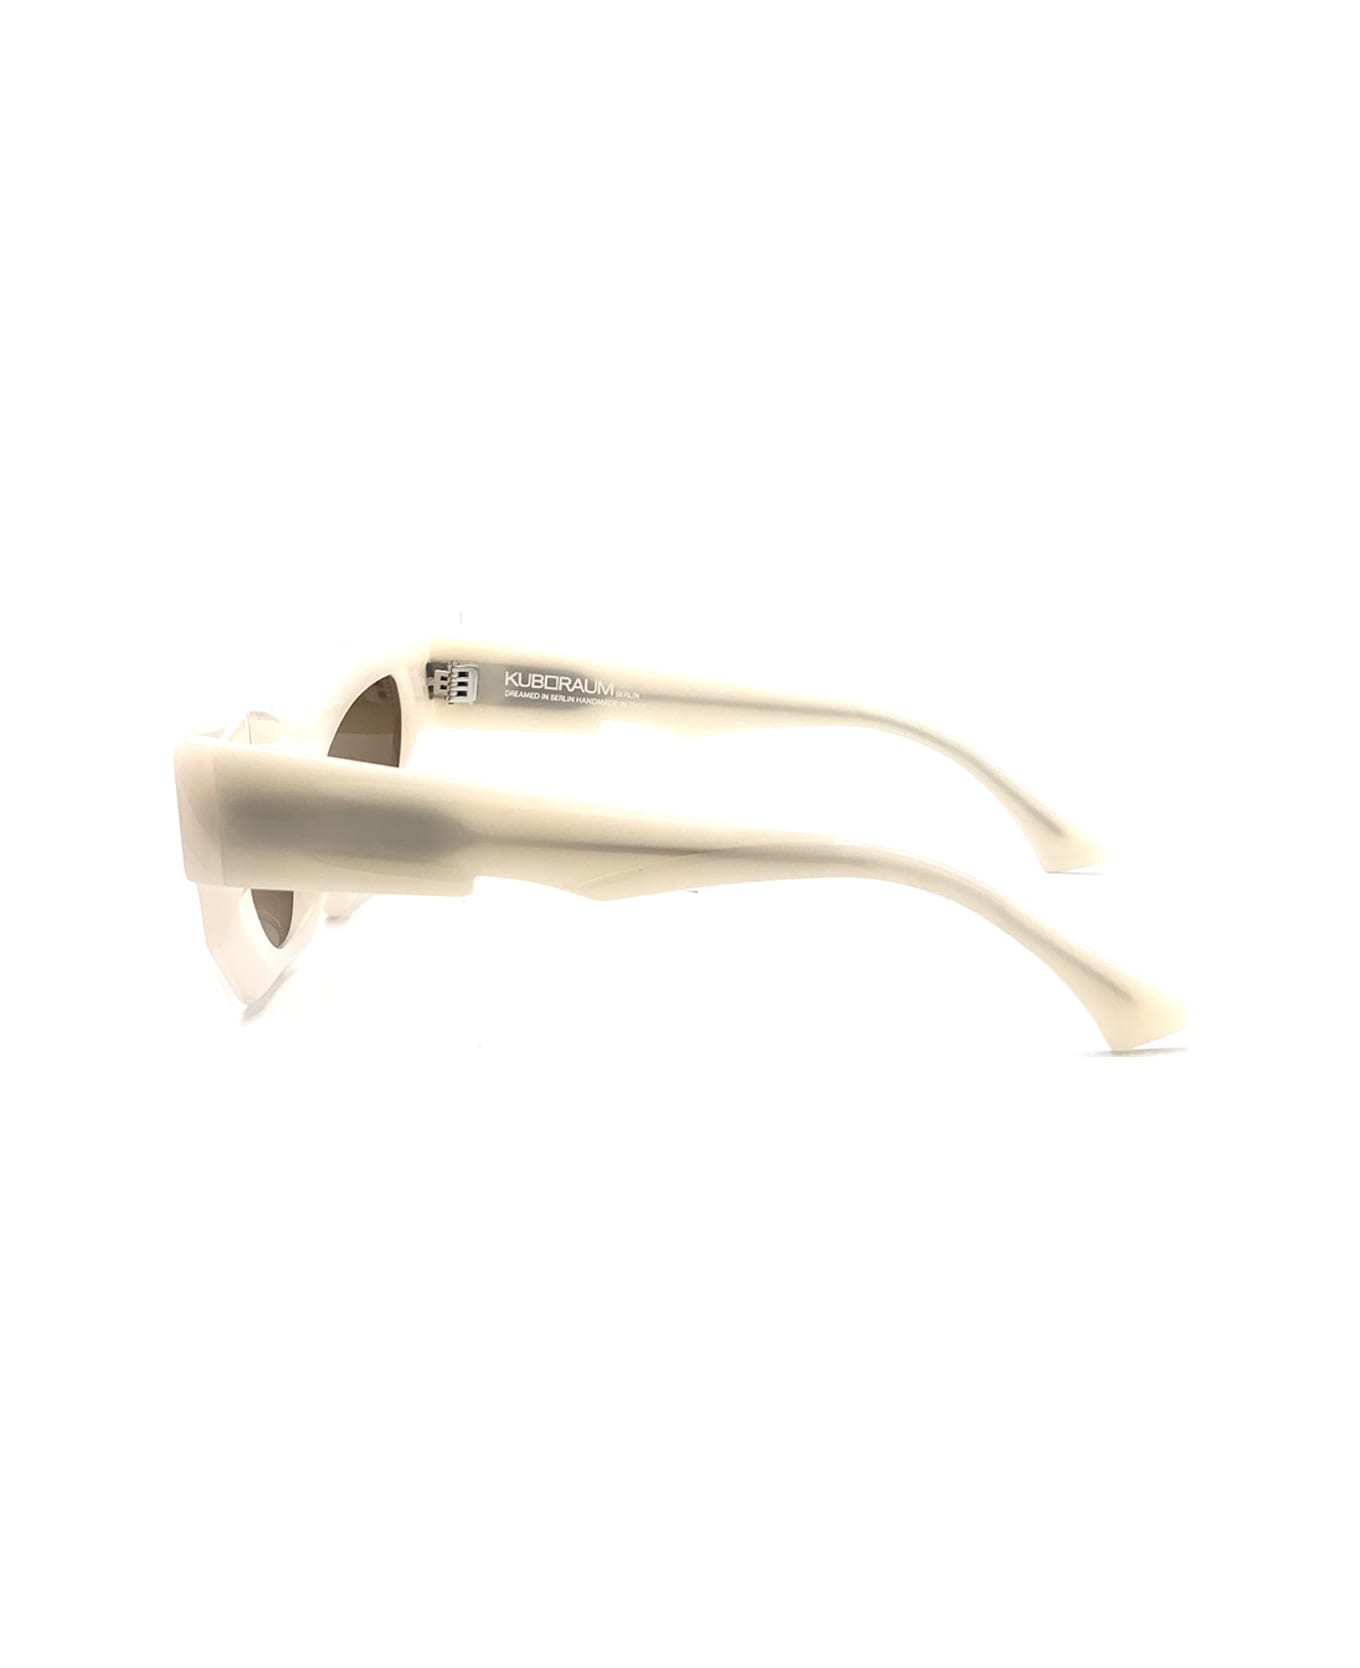 Kuboraum Maske F5 Wh Sunglasses - Bianco サングラス